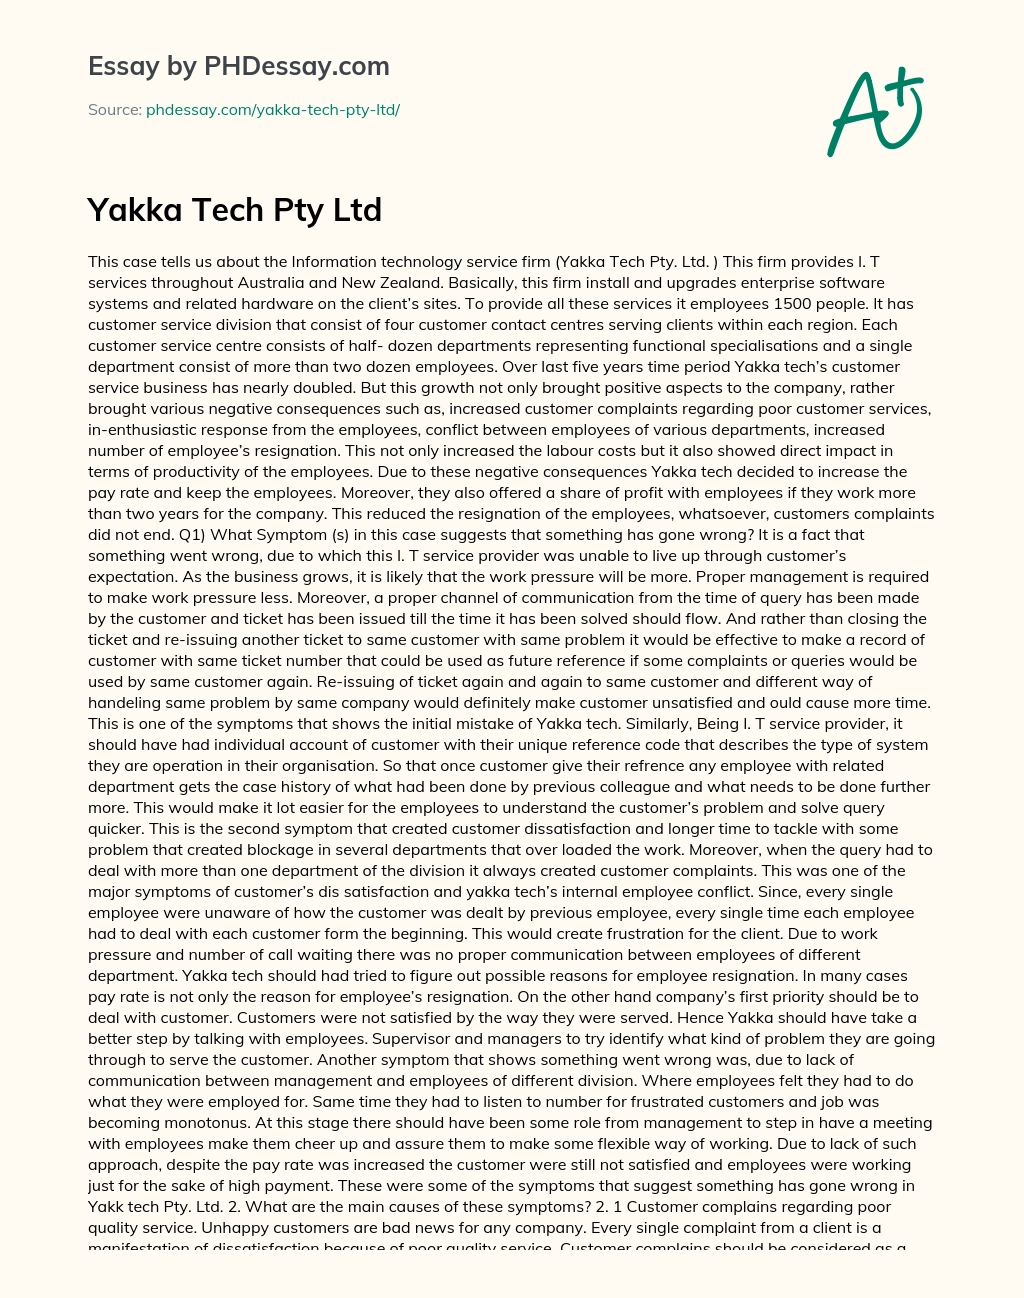 Yakka Tech’s Customer Service Growth Brings Negative Consequences essay